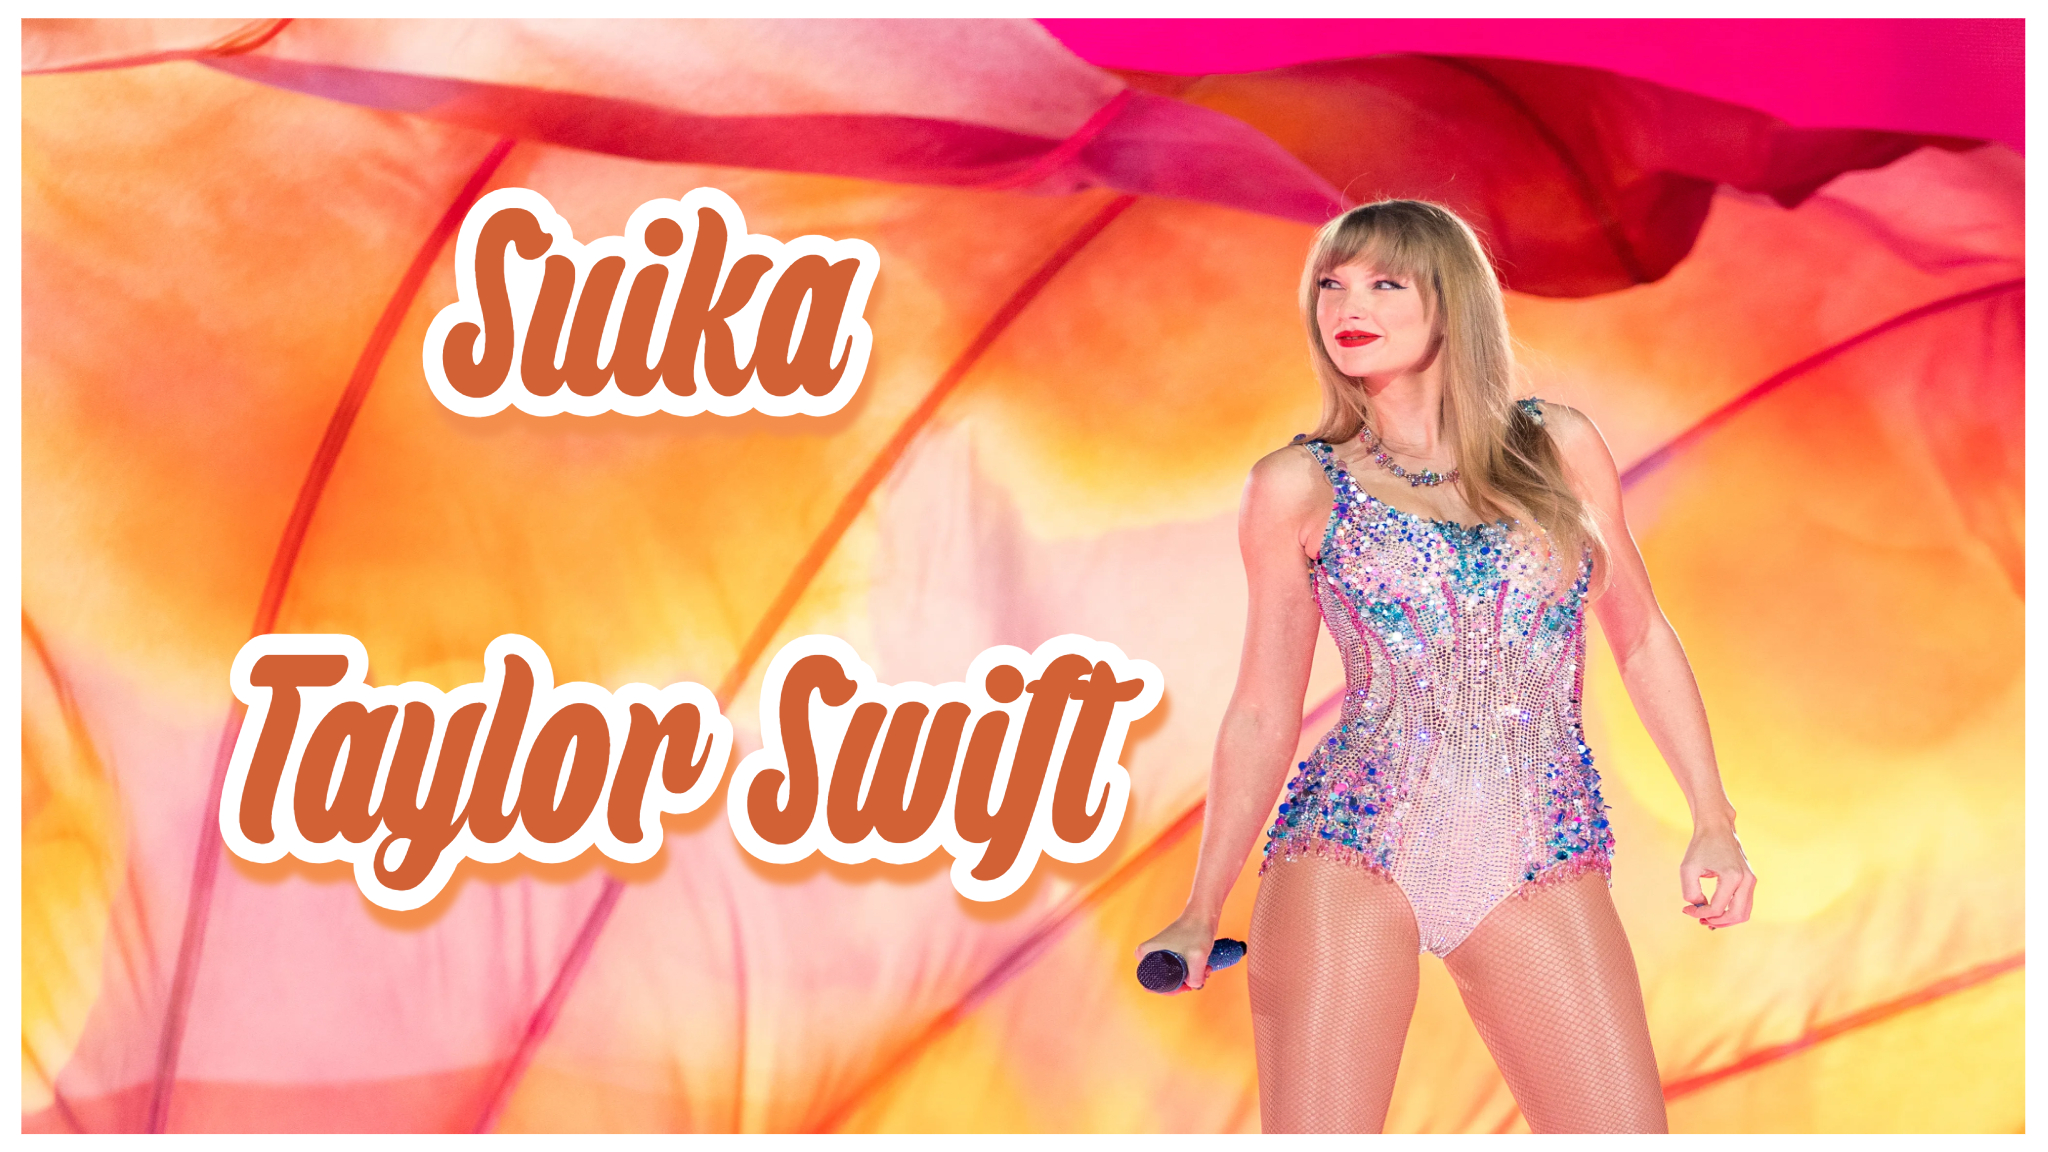 Suika Taylor Swift - Play Suika Taylor Swift On Word Hurdle